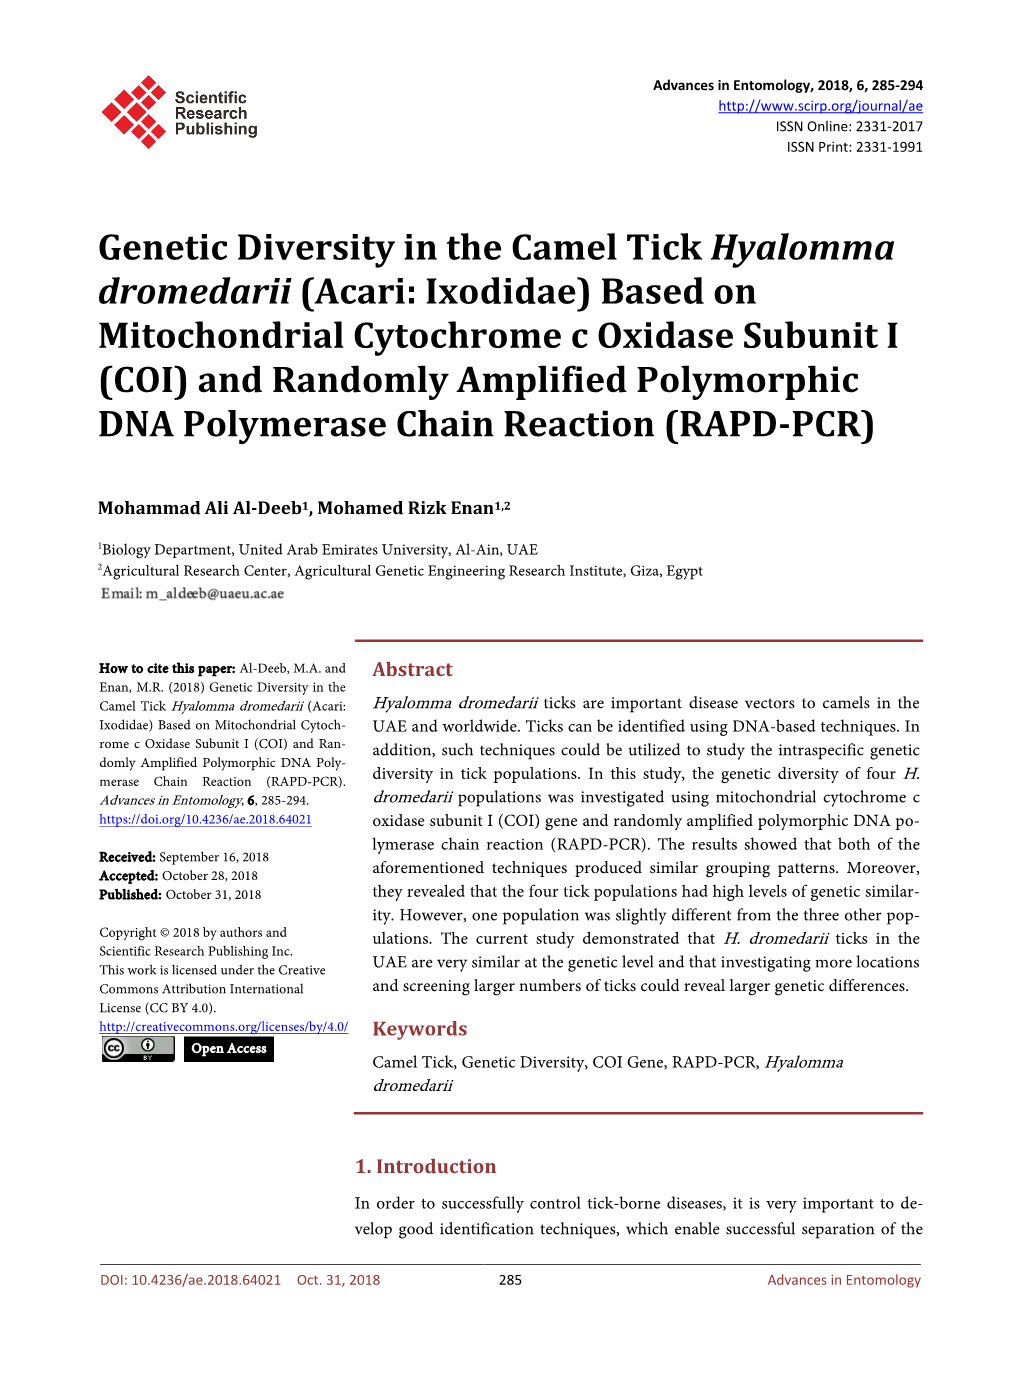 Genetic Diversity in the Camel Tick Hyalomma Dromedarii (Acari